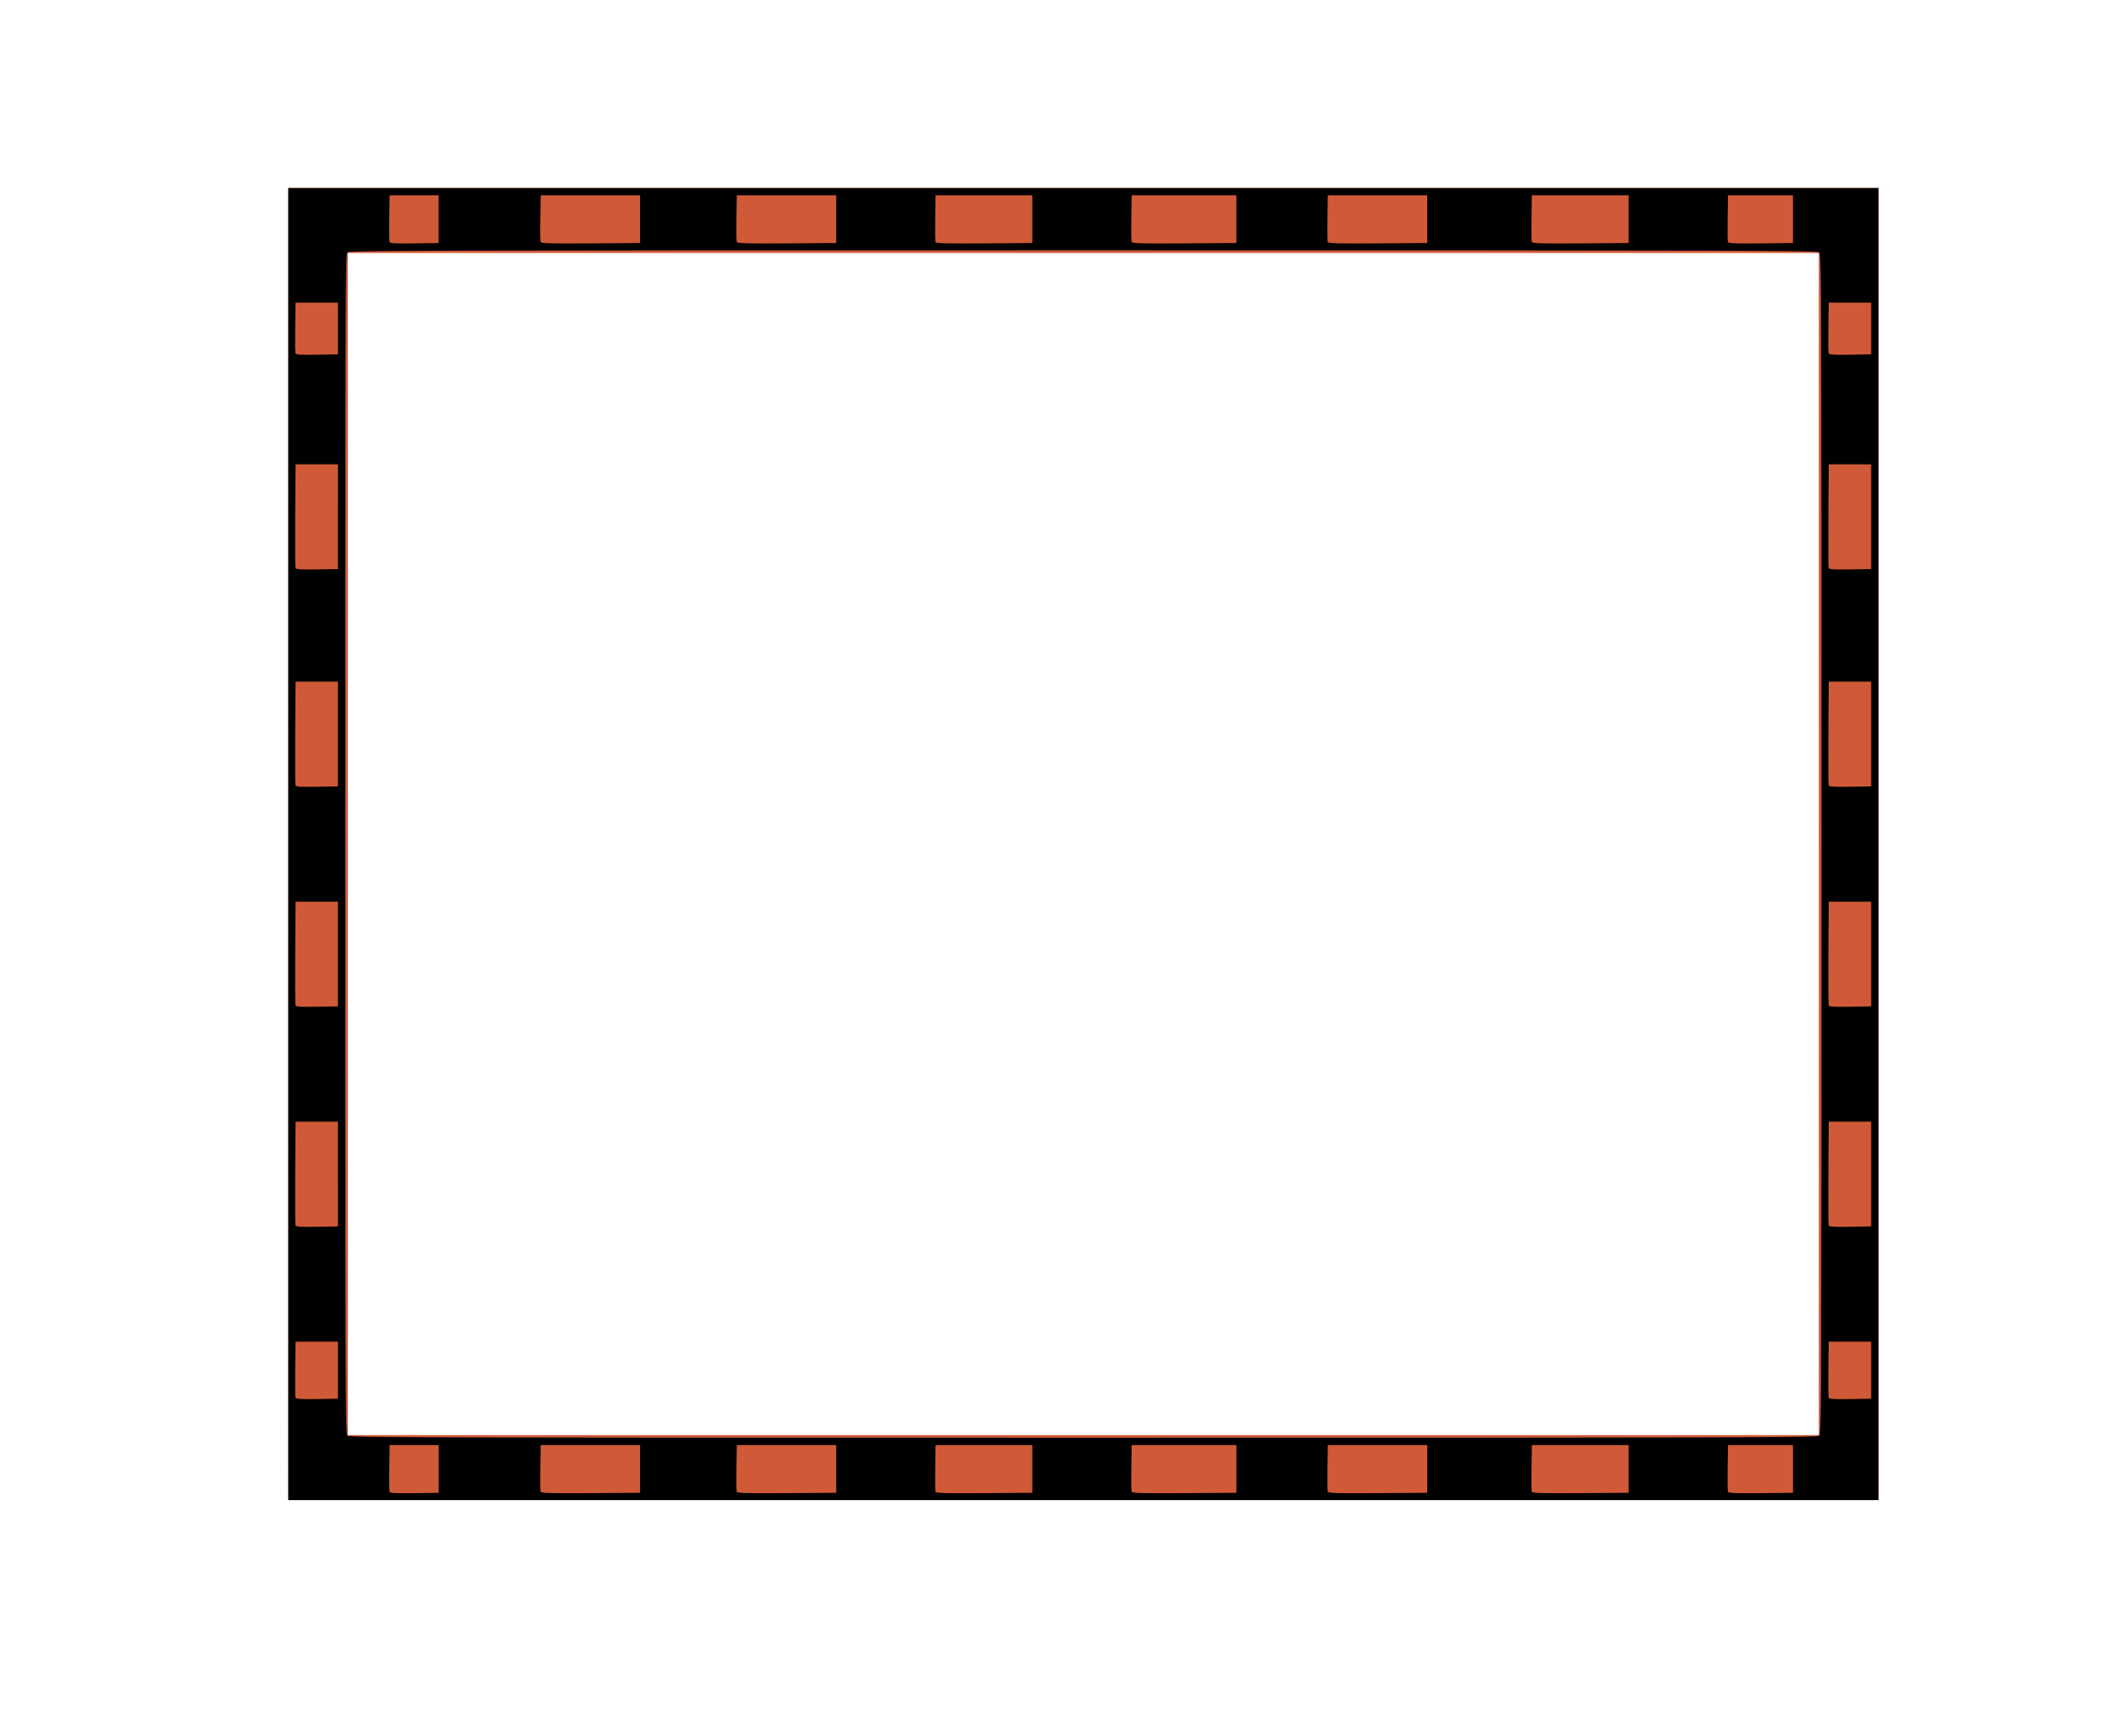 Worldlabel Com Border Orange Black 4x3 3 By Ryanlerch